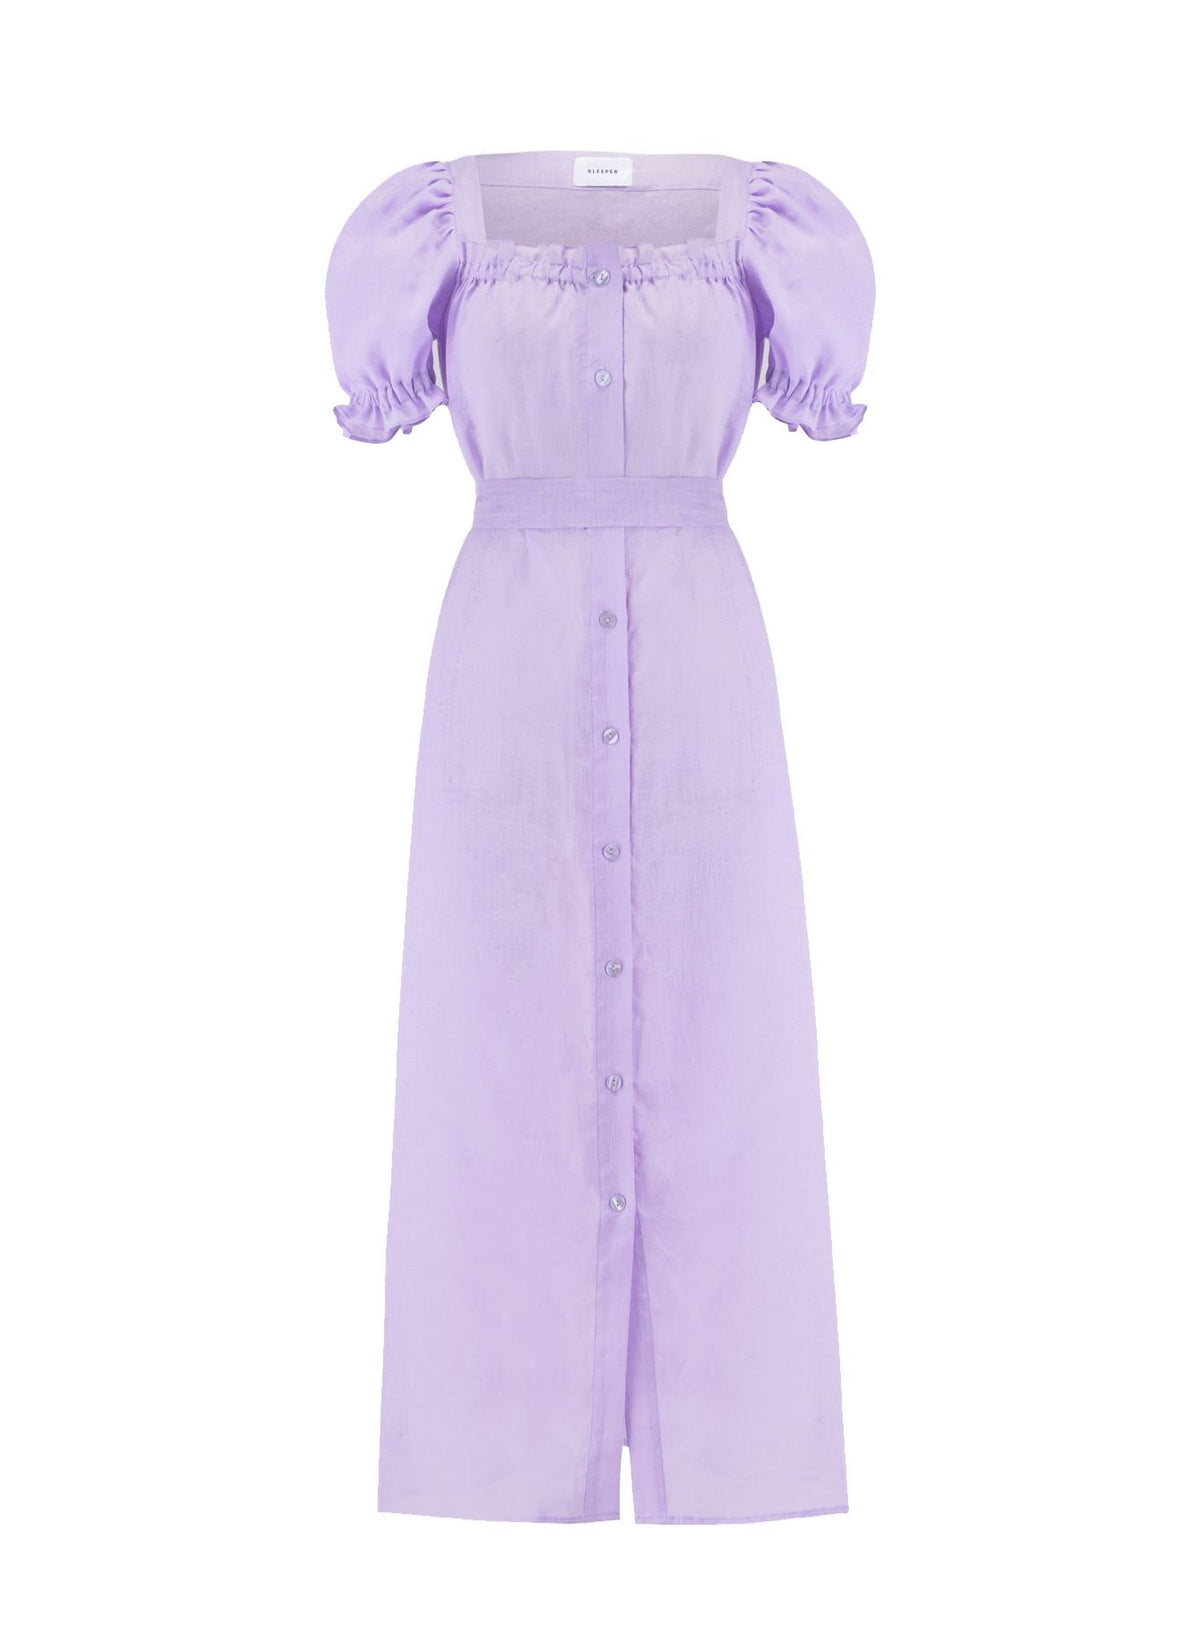 Brigitte Linen Maxi Dress in Lavender